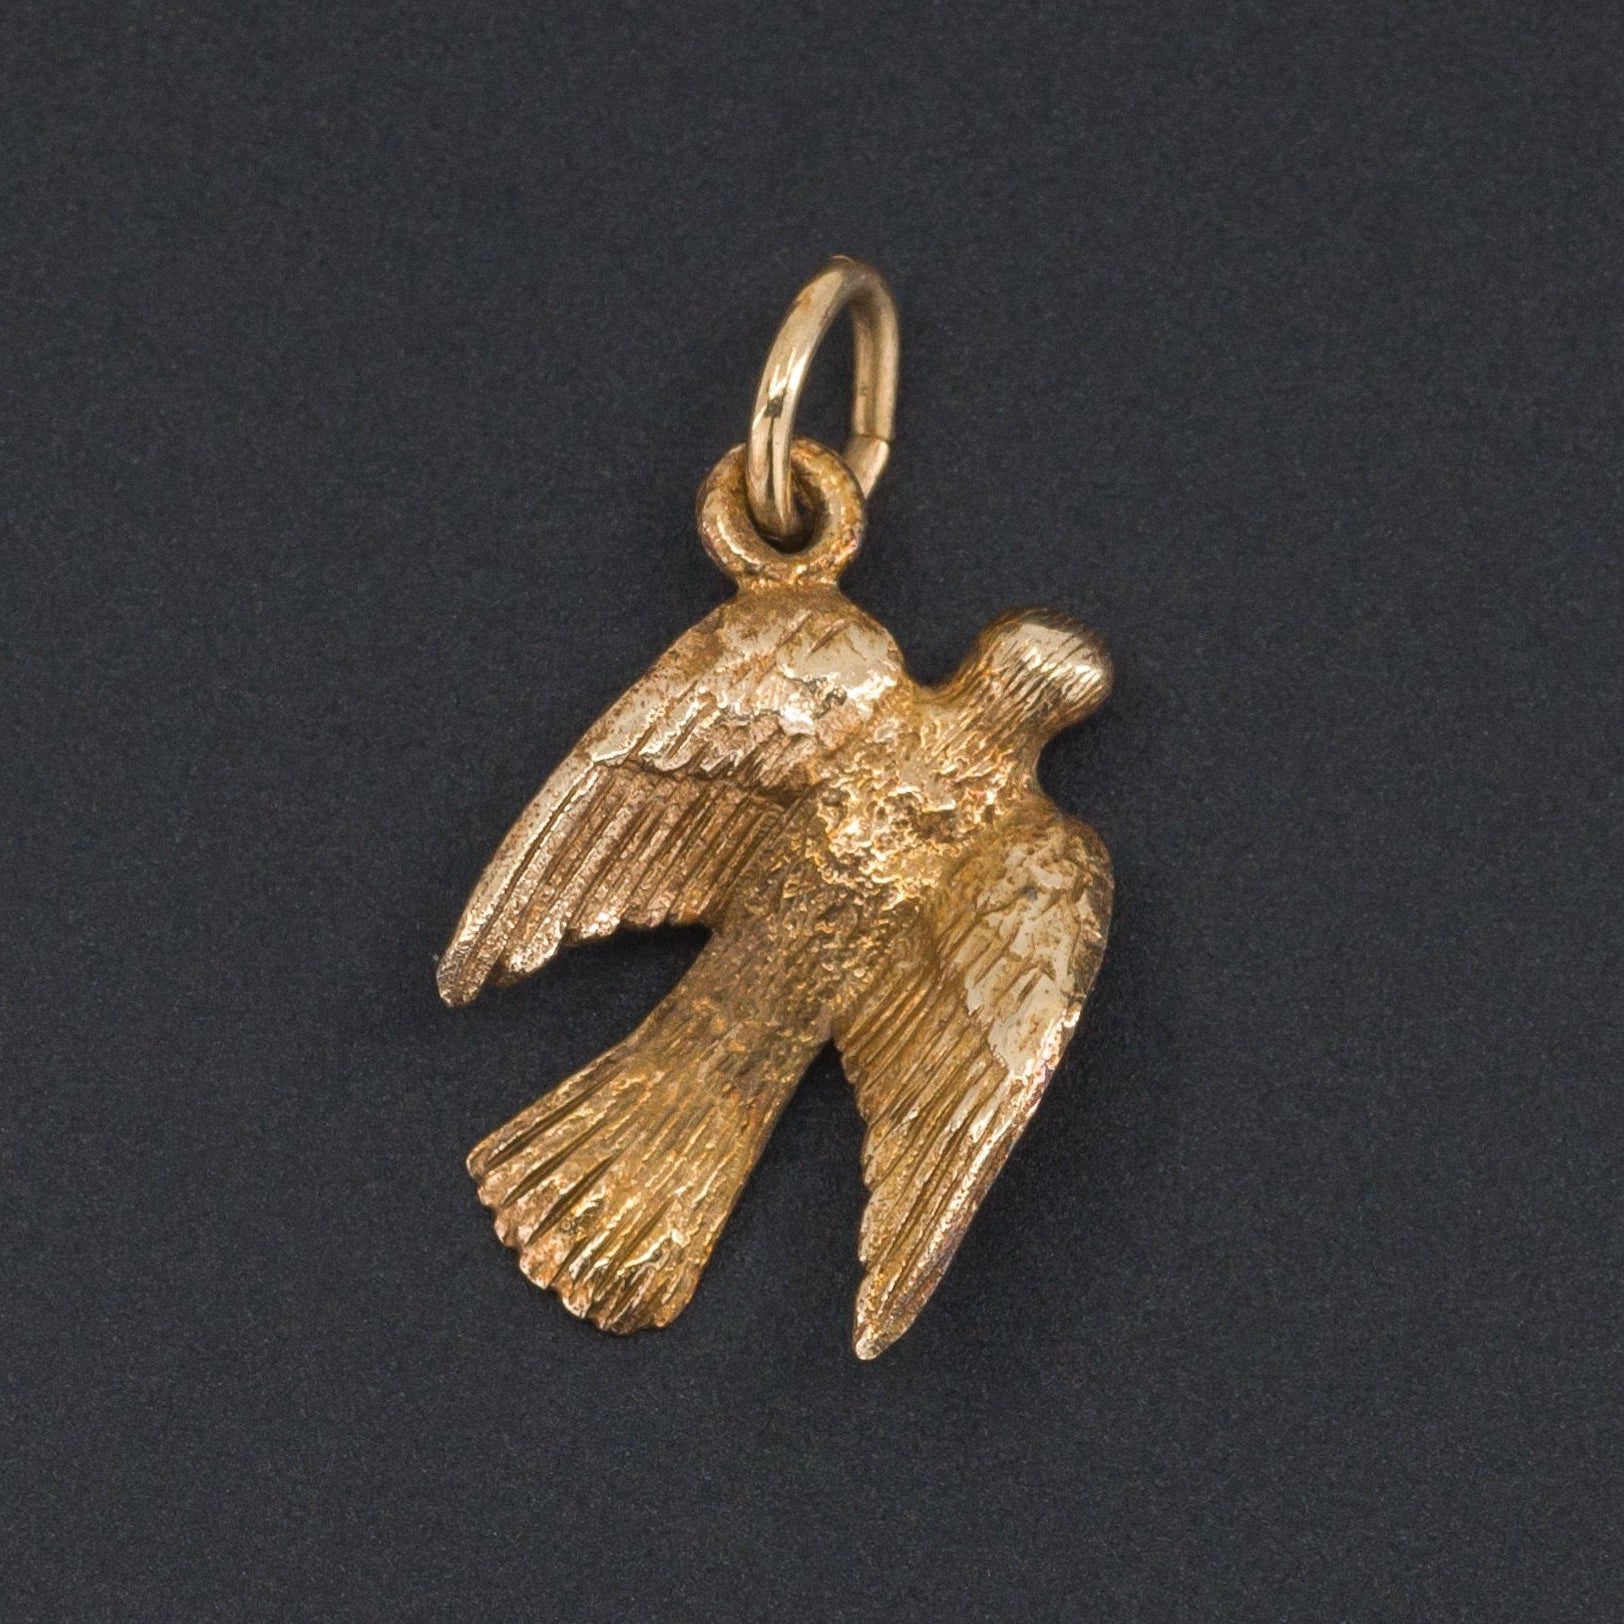 Bird Charm | Antique Bird Charm | 10k Gold Charm | Pin Conversion | Gold Charm